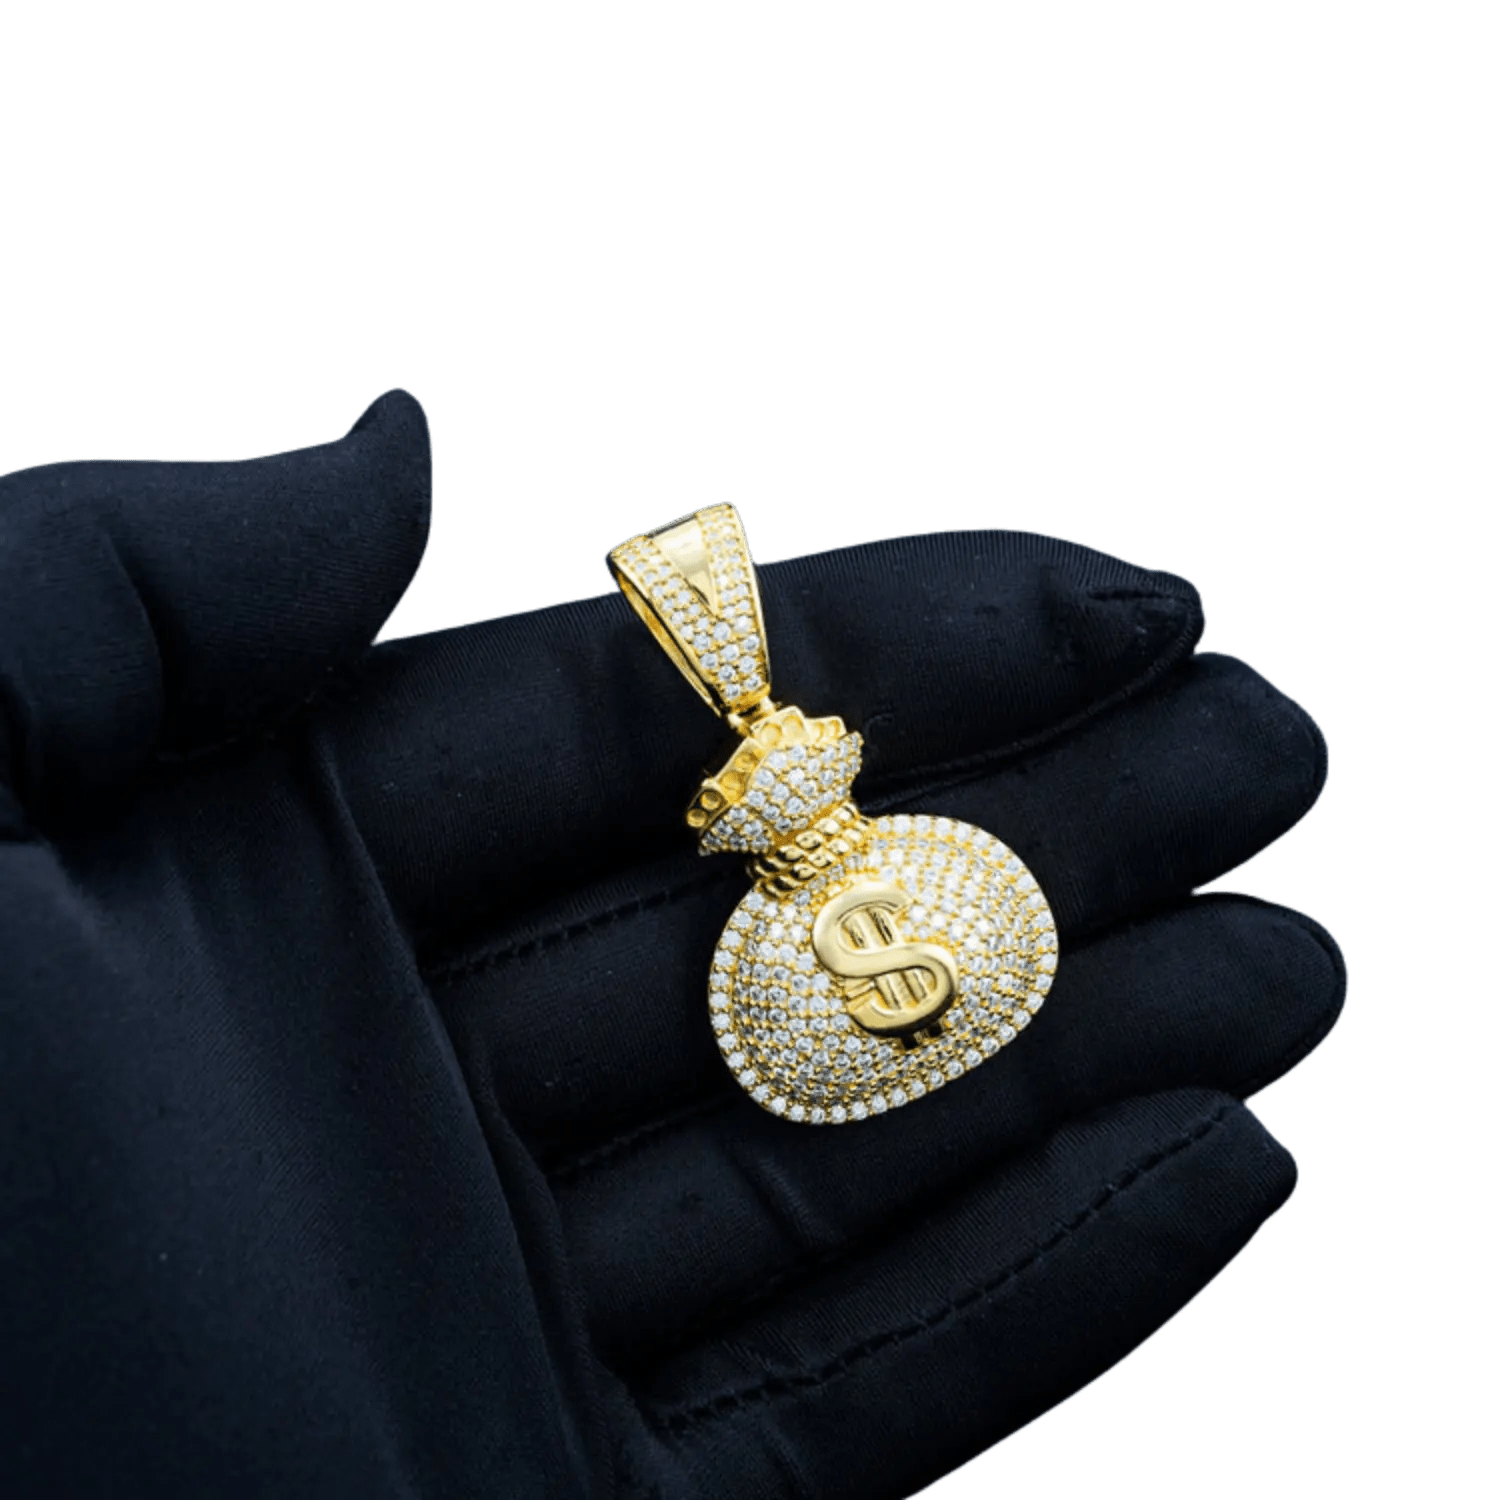 Diamond Money Bag Pendant | Yellow Gold - Superior Stirling